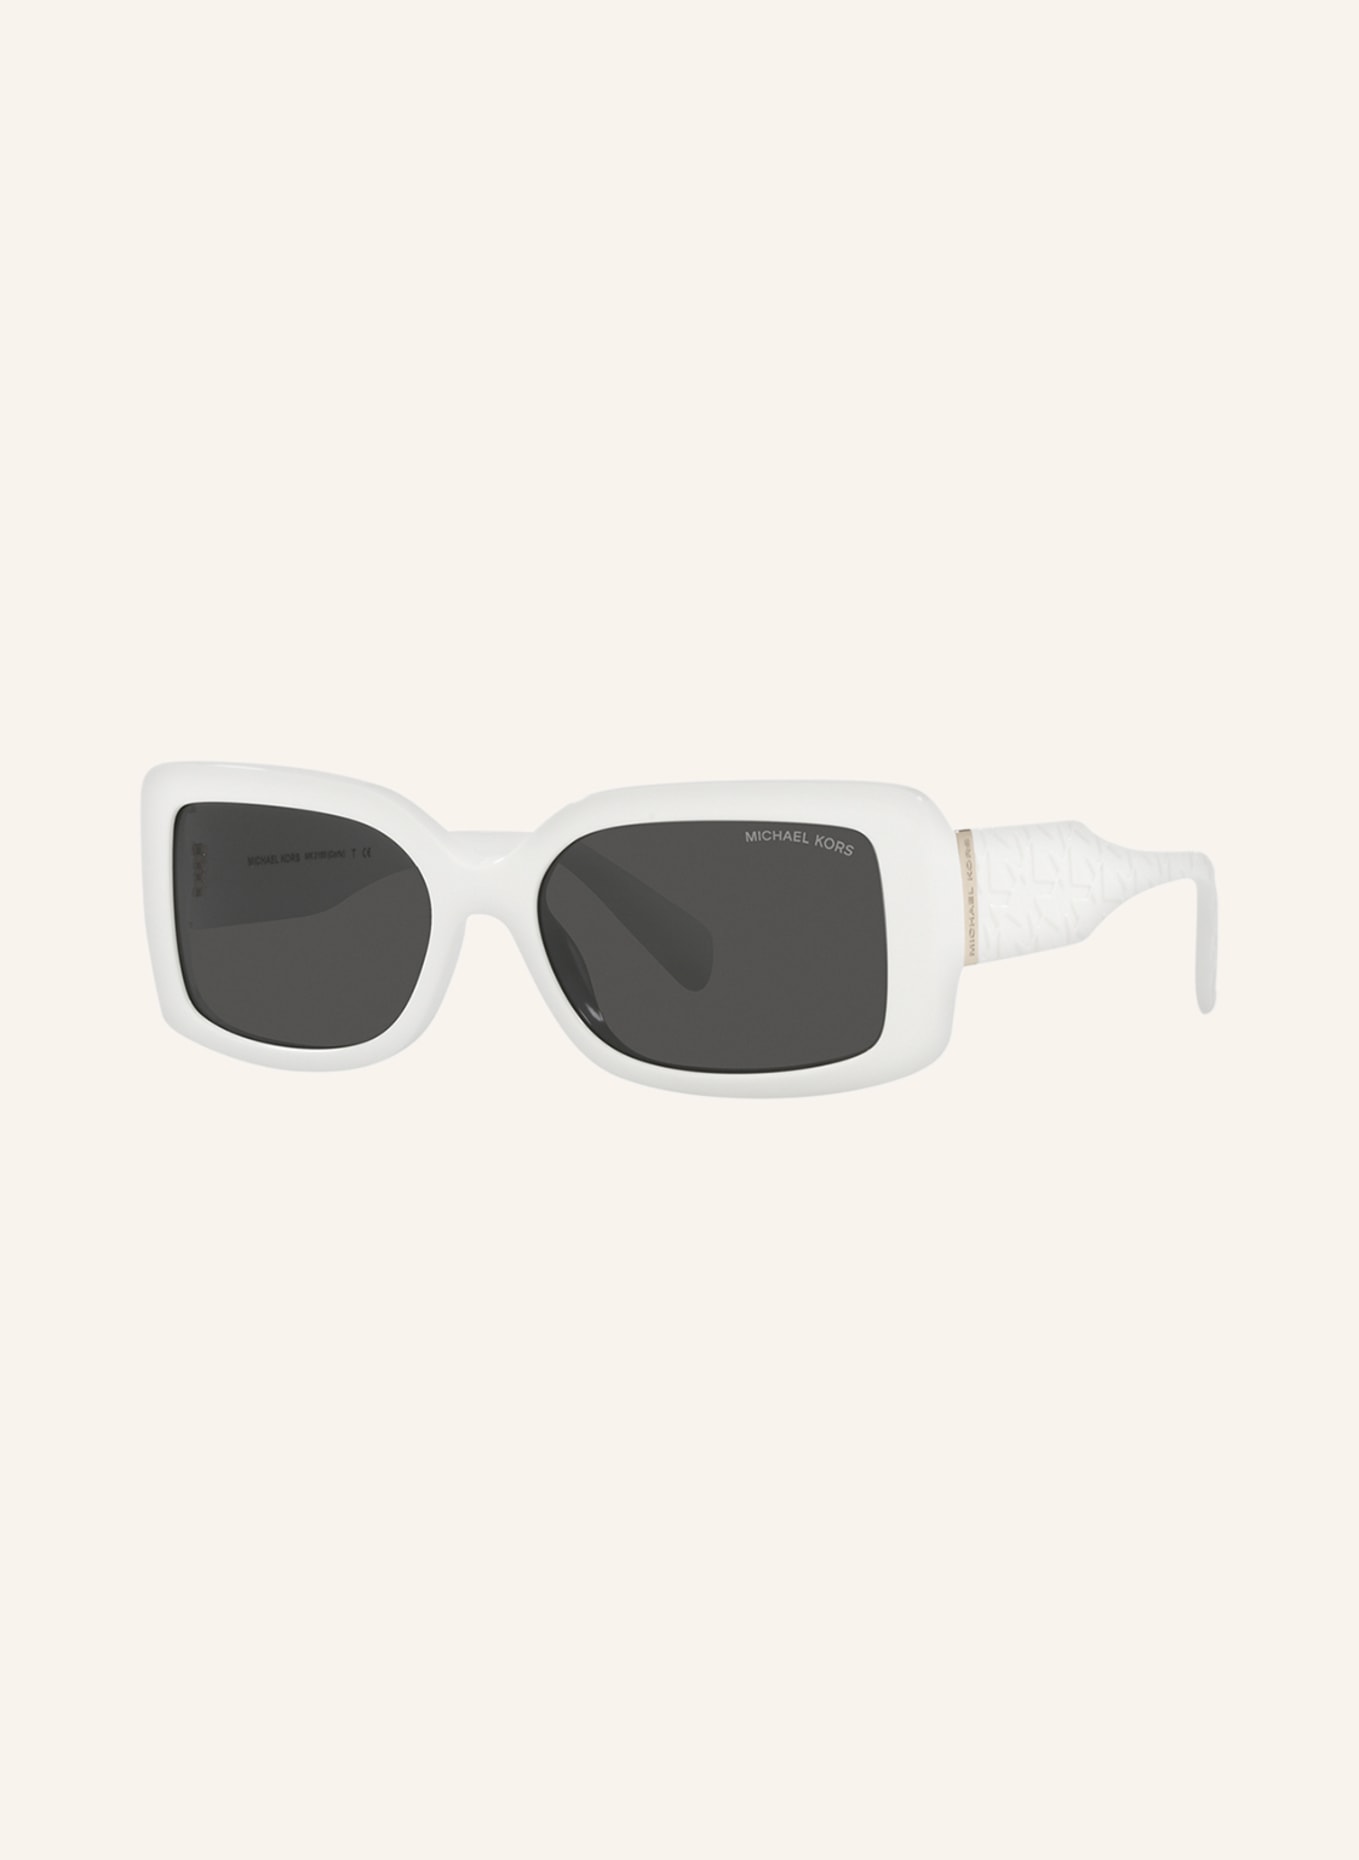 Michael Kors MK 2186U Bali 31168G White  Sunglasses Woman